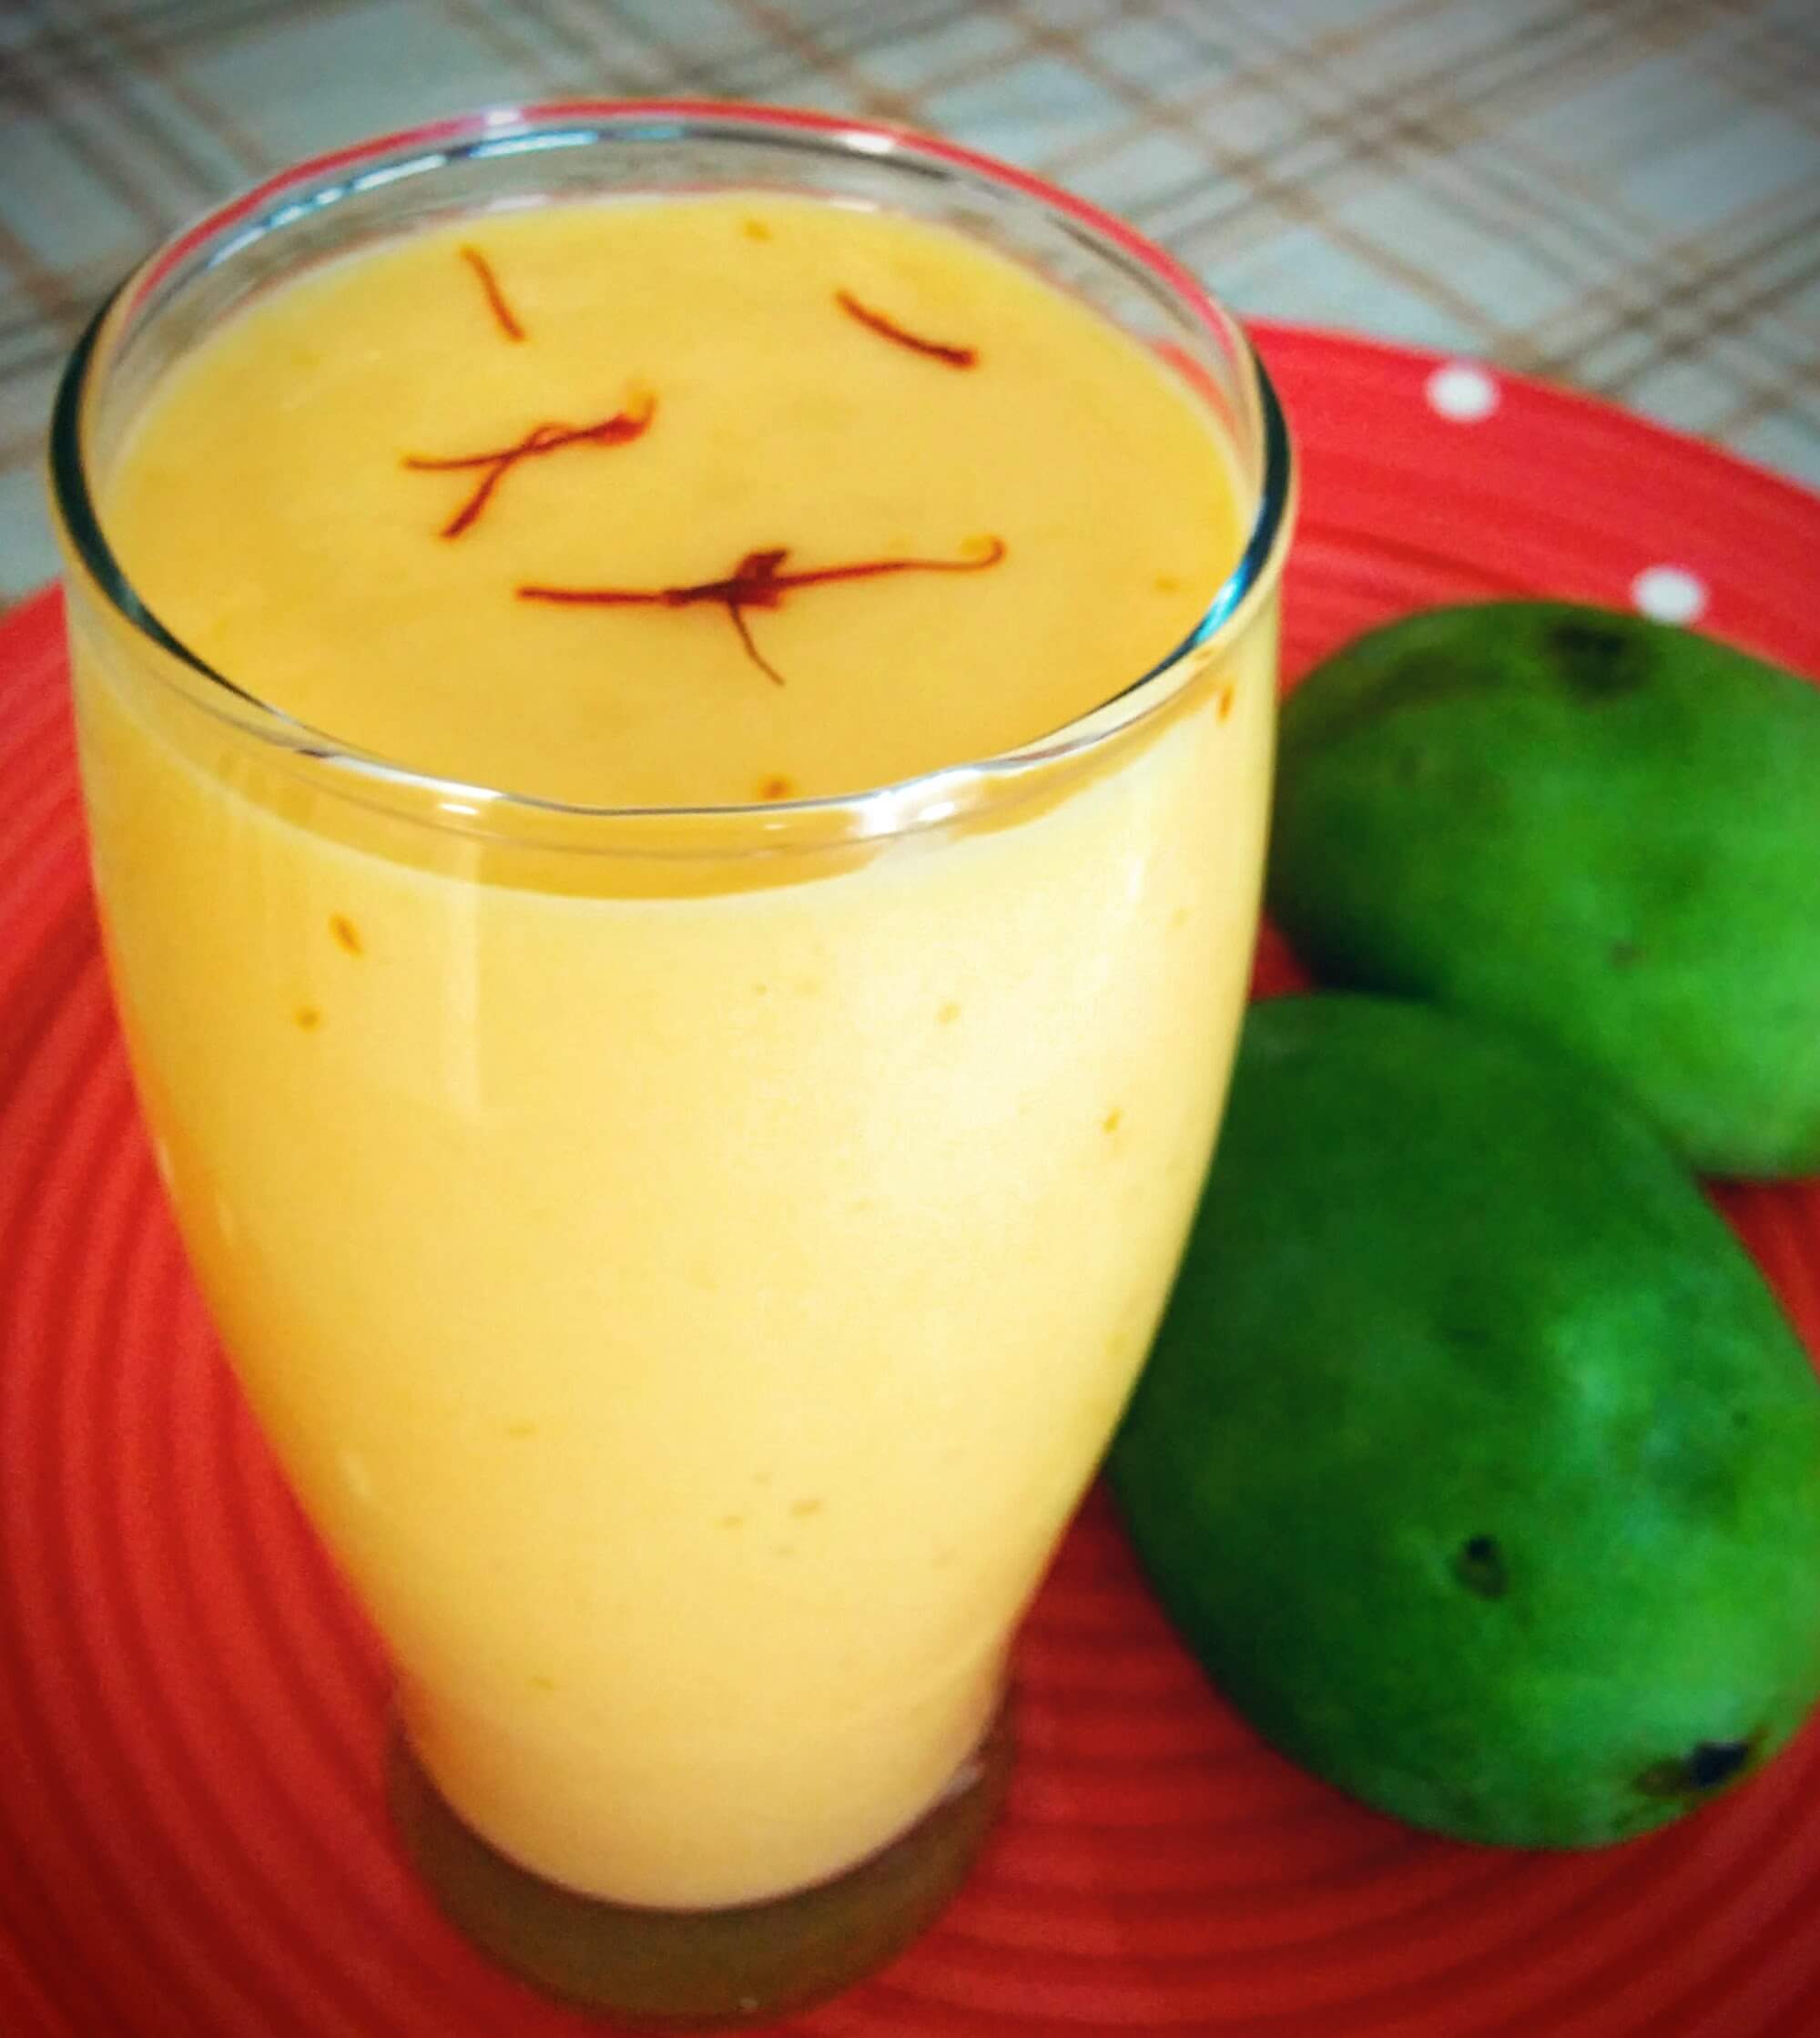 Mango Milkshake Recipe Step By Step Instructions